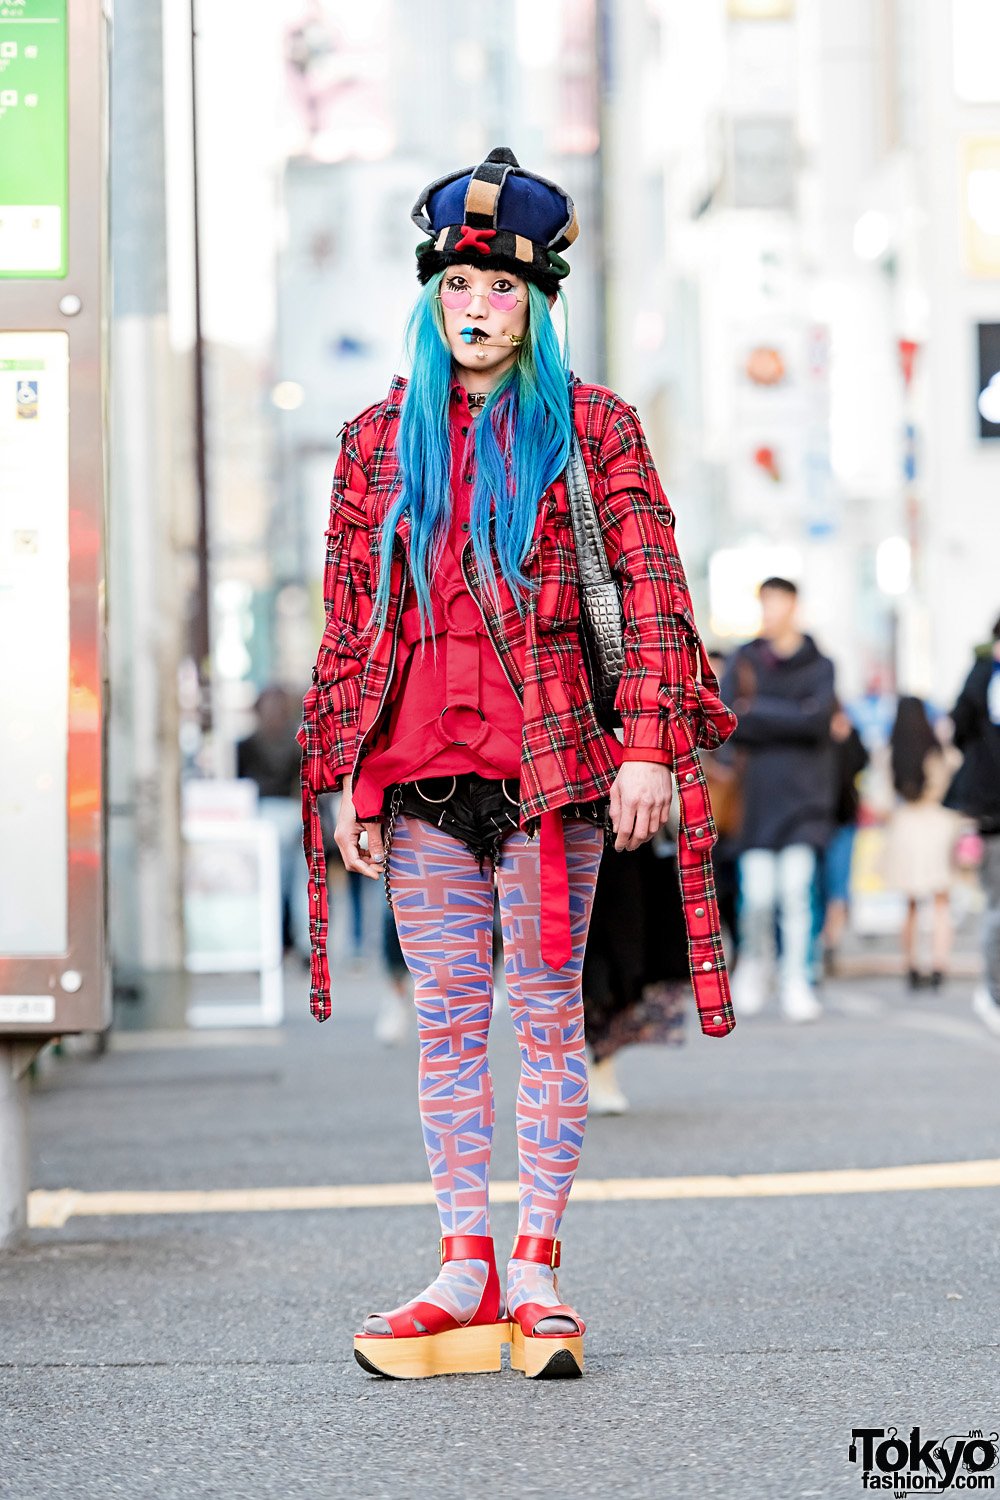 Tokyo Fashion on X: Japanese fashion buyer & longtime Tokyo